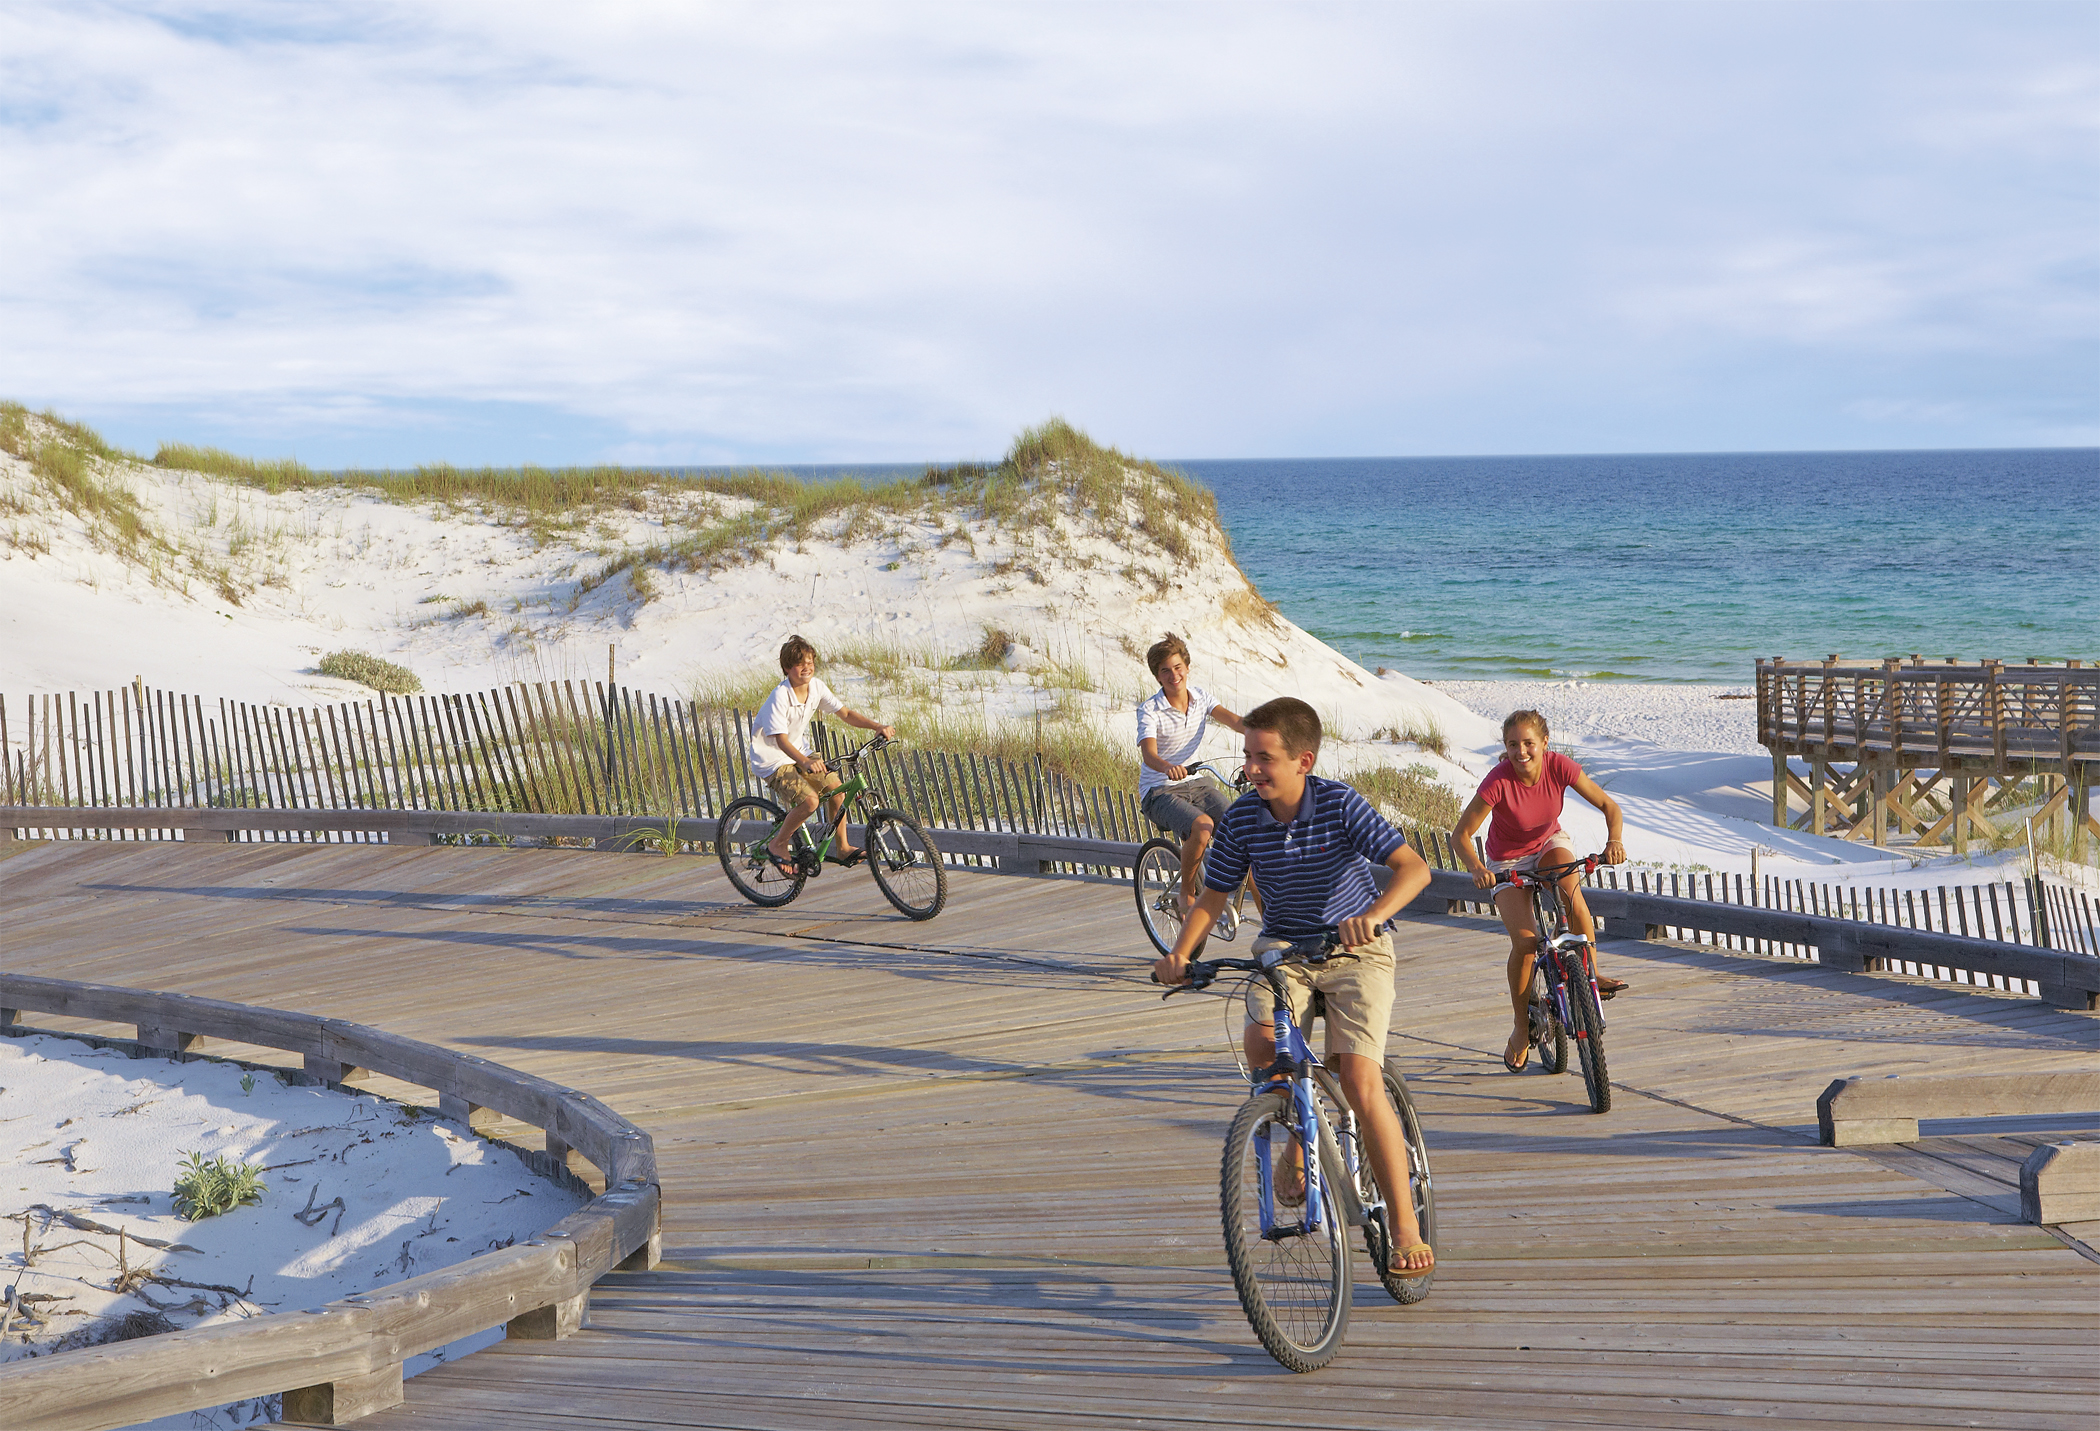 Riding bikes on the watersound boardwalk